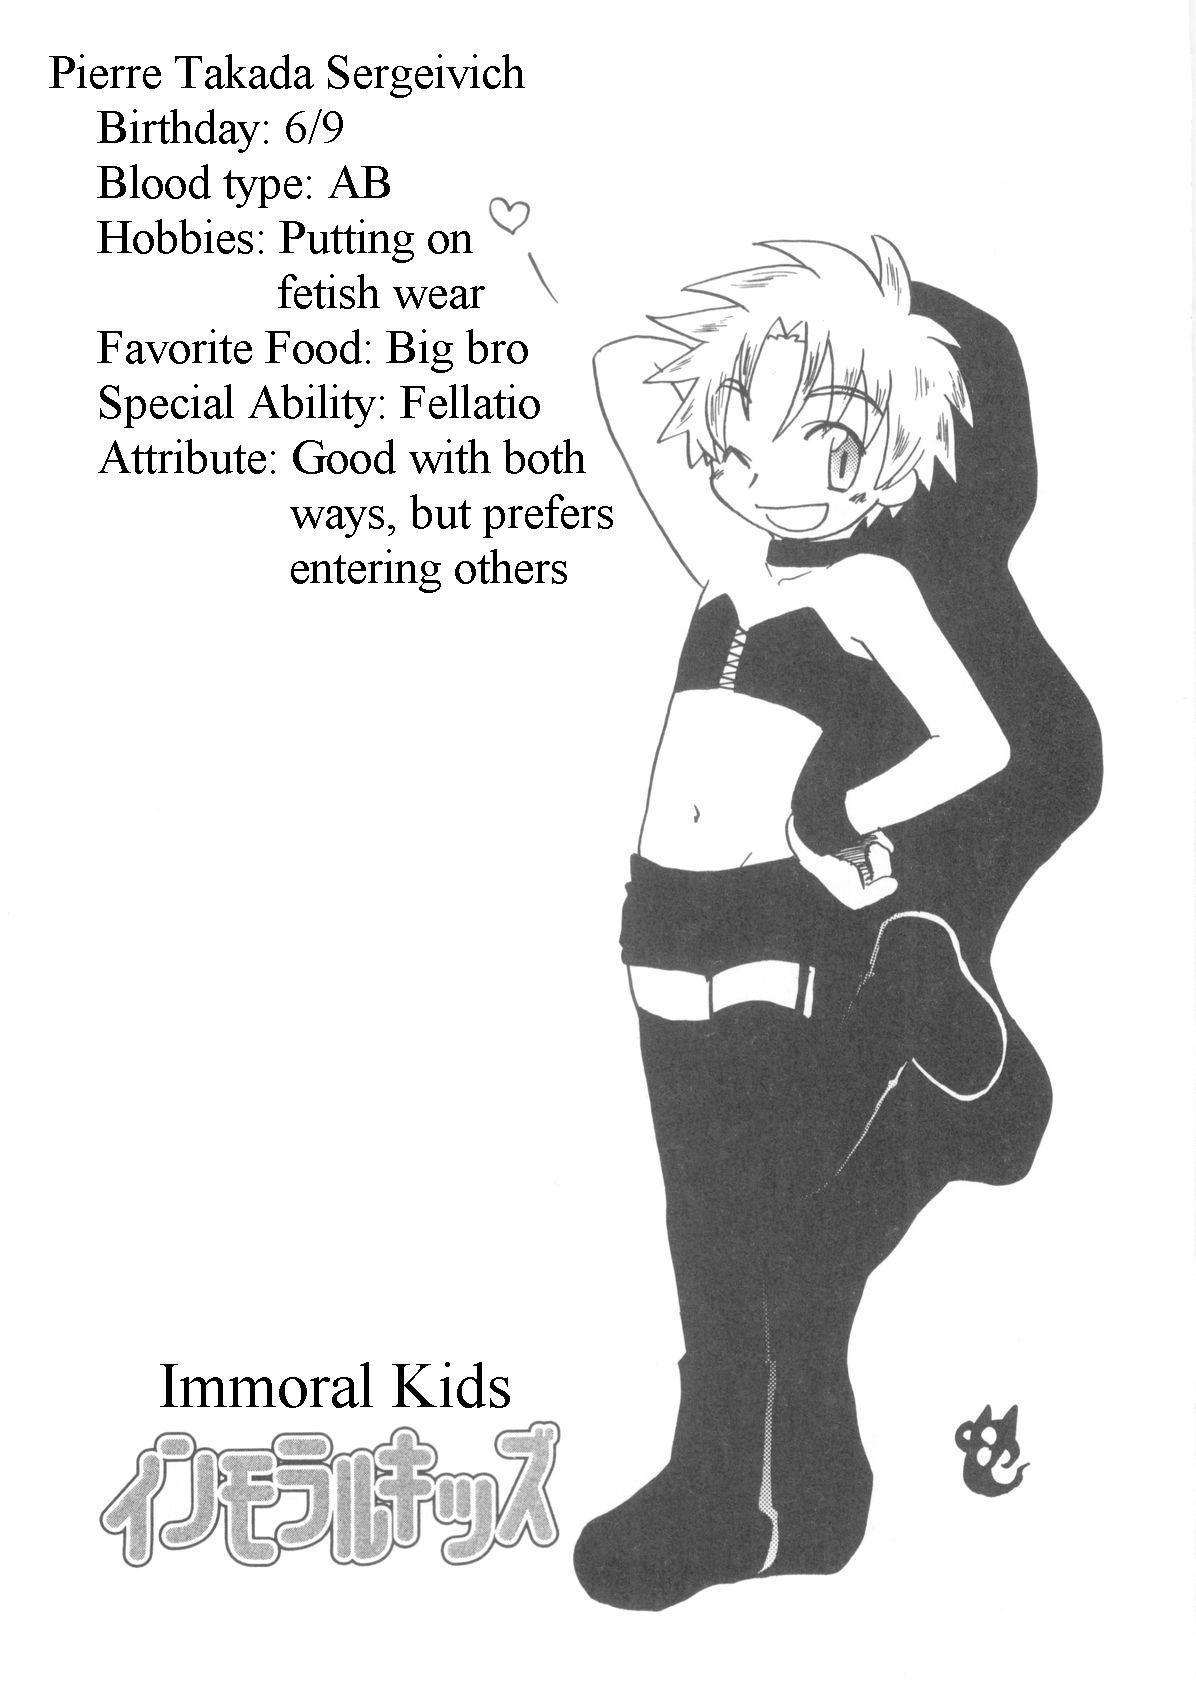 Immoral Kids 91